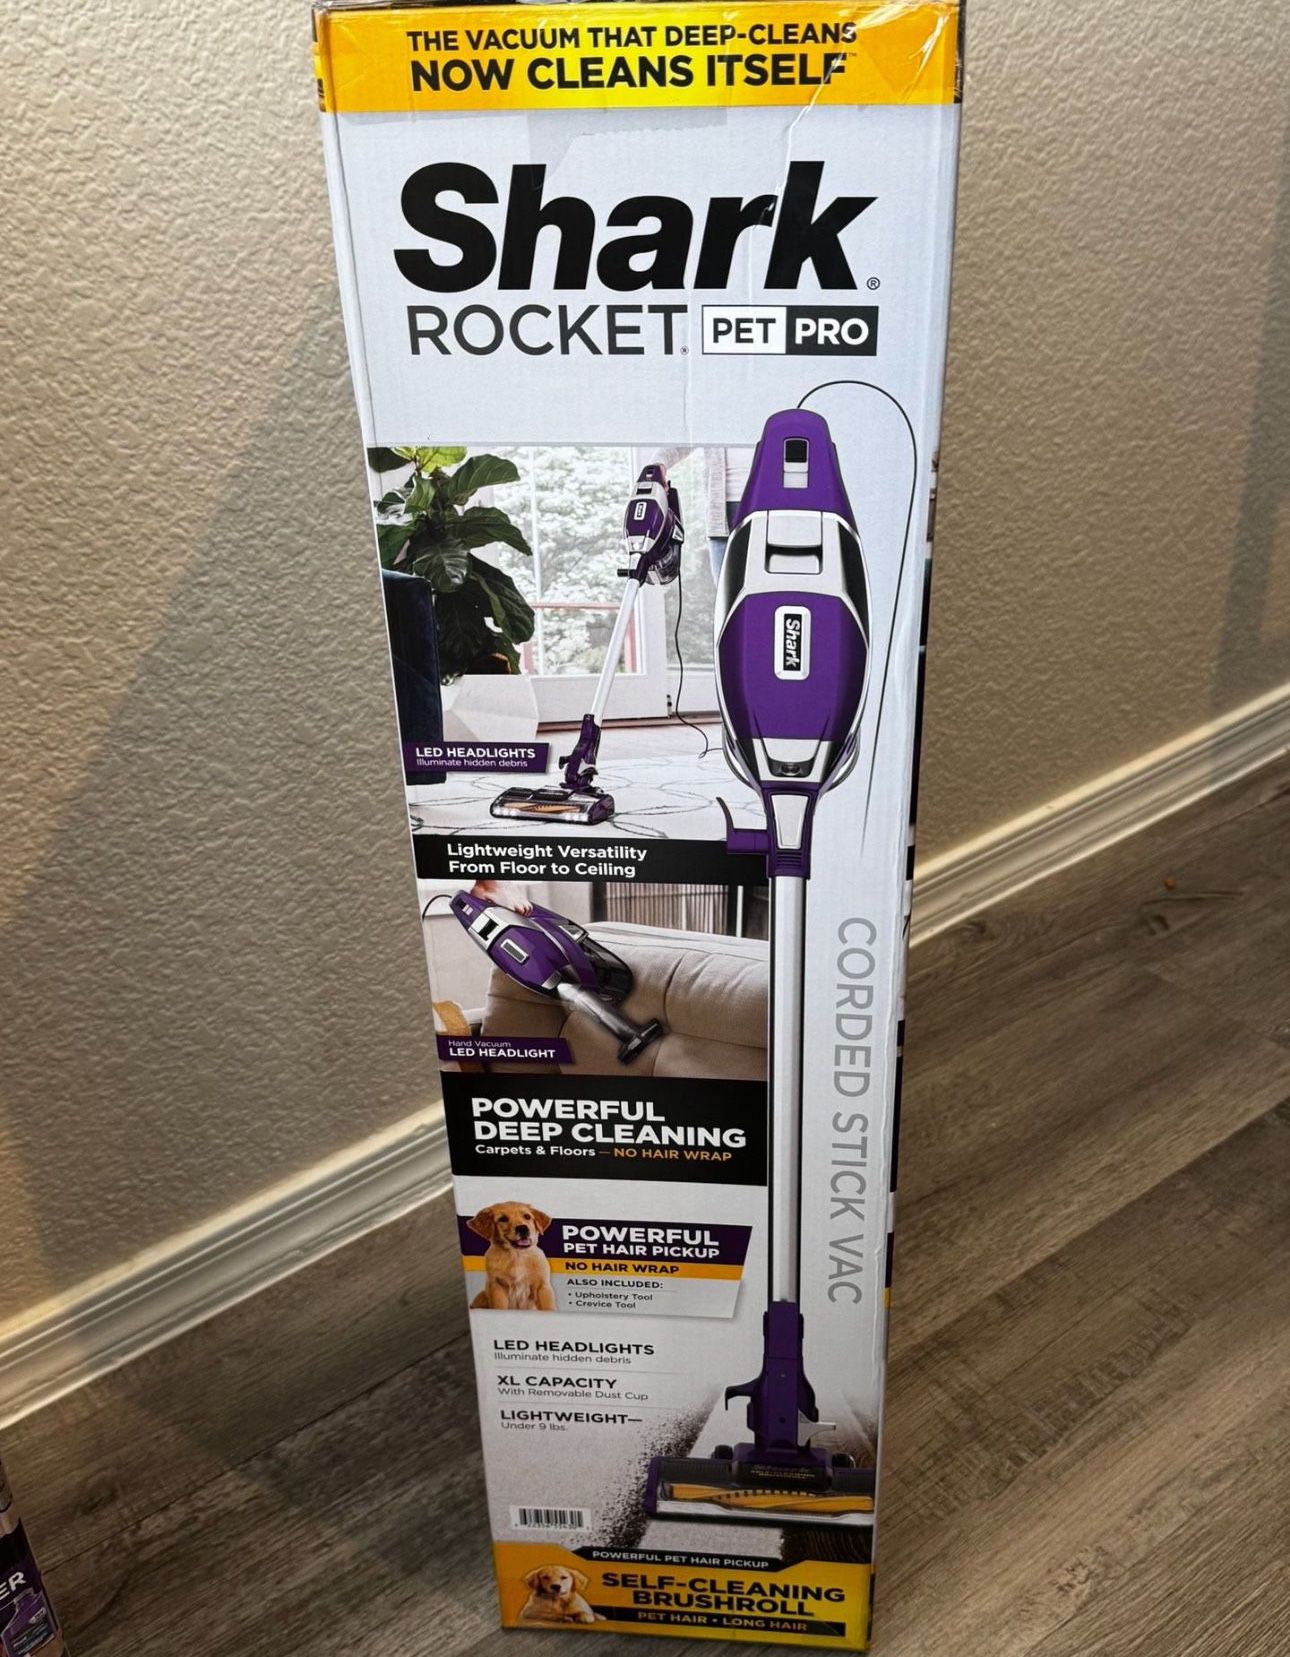 Shark Rocket Pet Pro Corded Stick Vacuum Cleaner